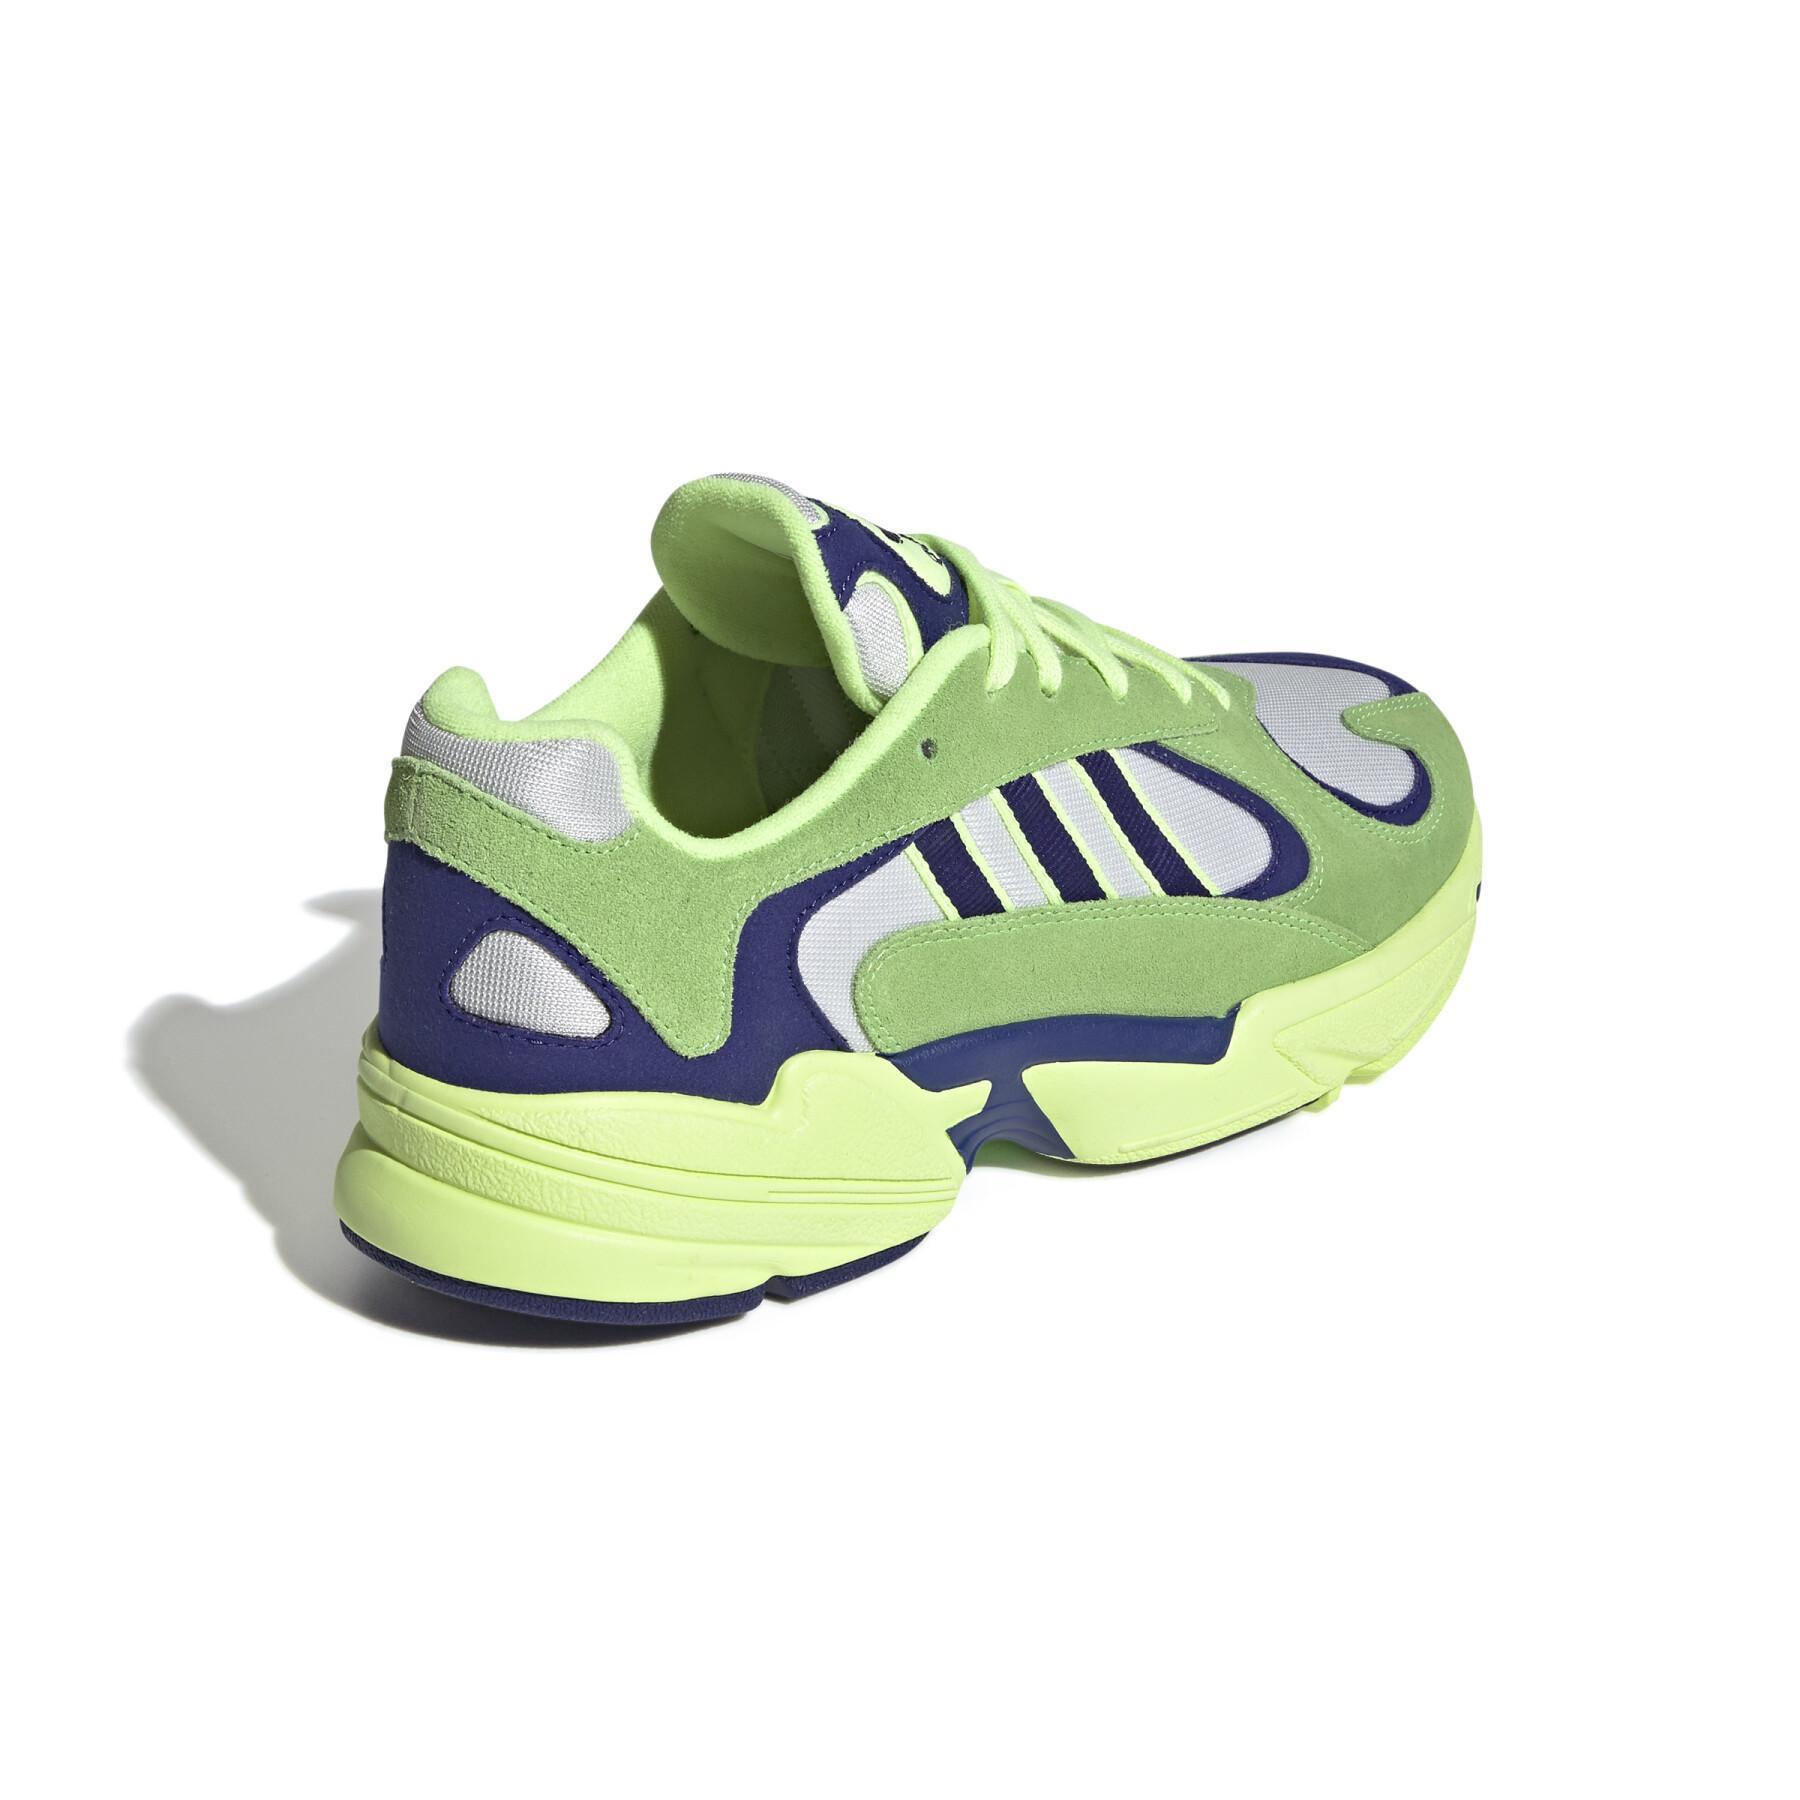 adidas Yung-1 Sneakers